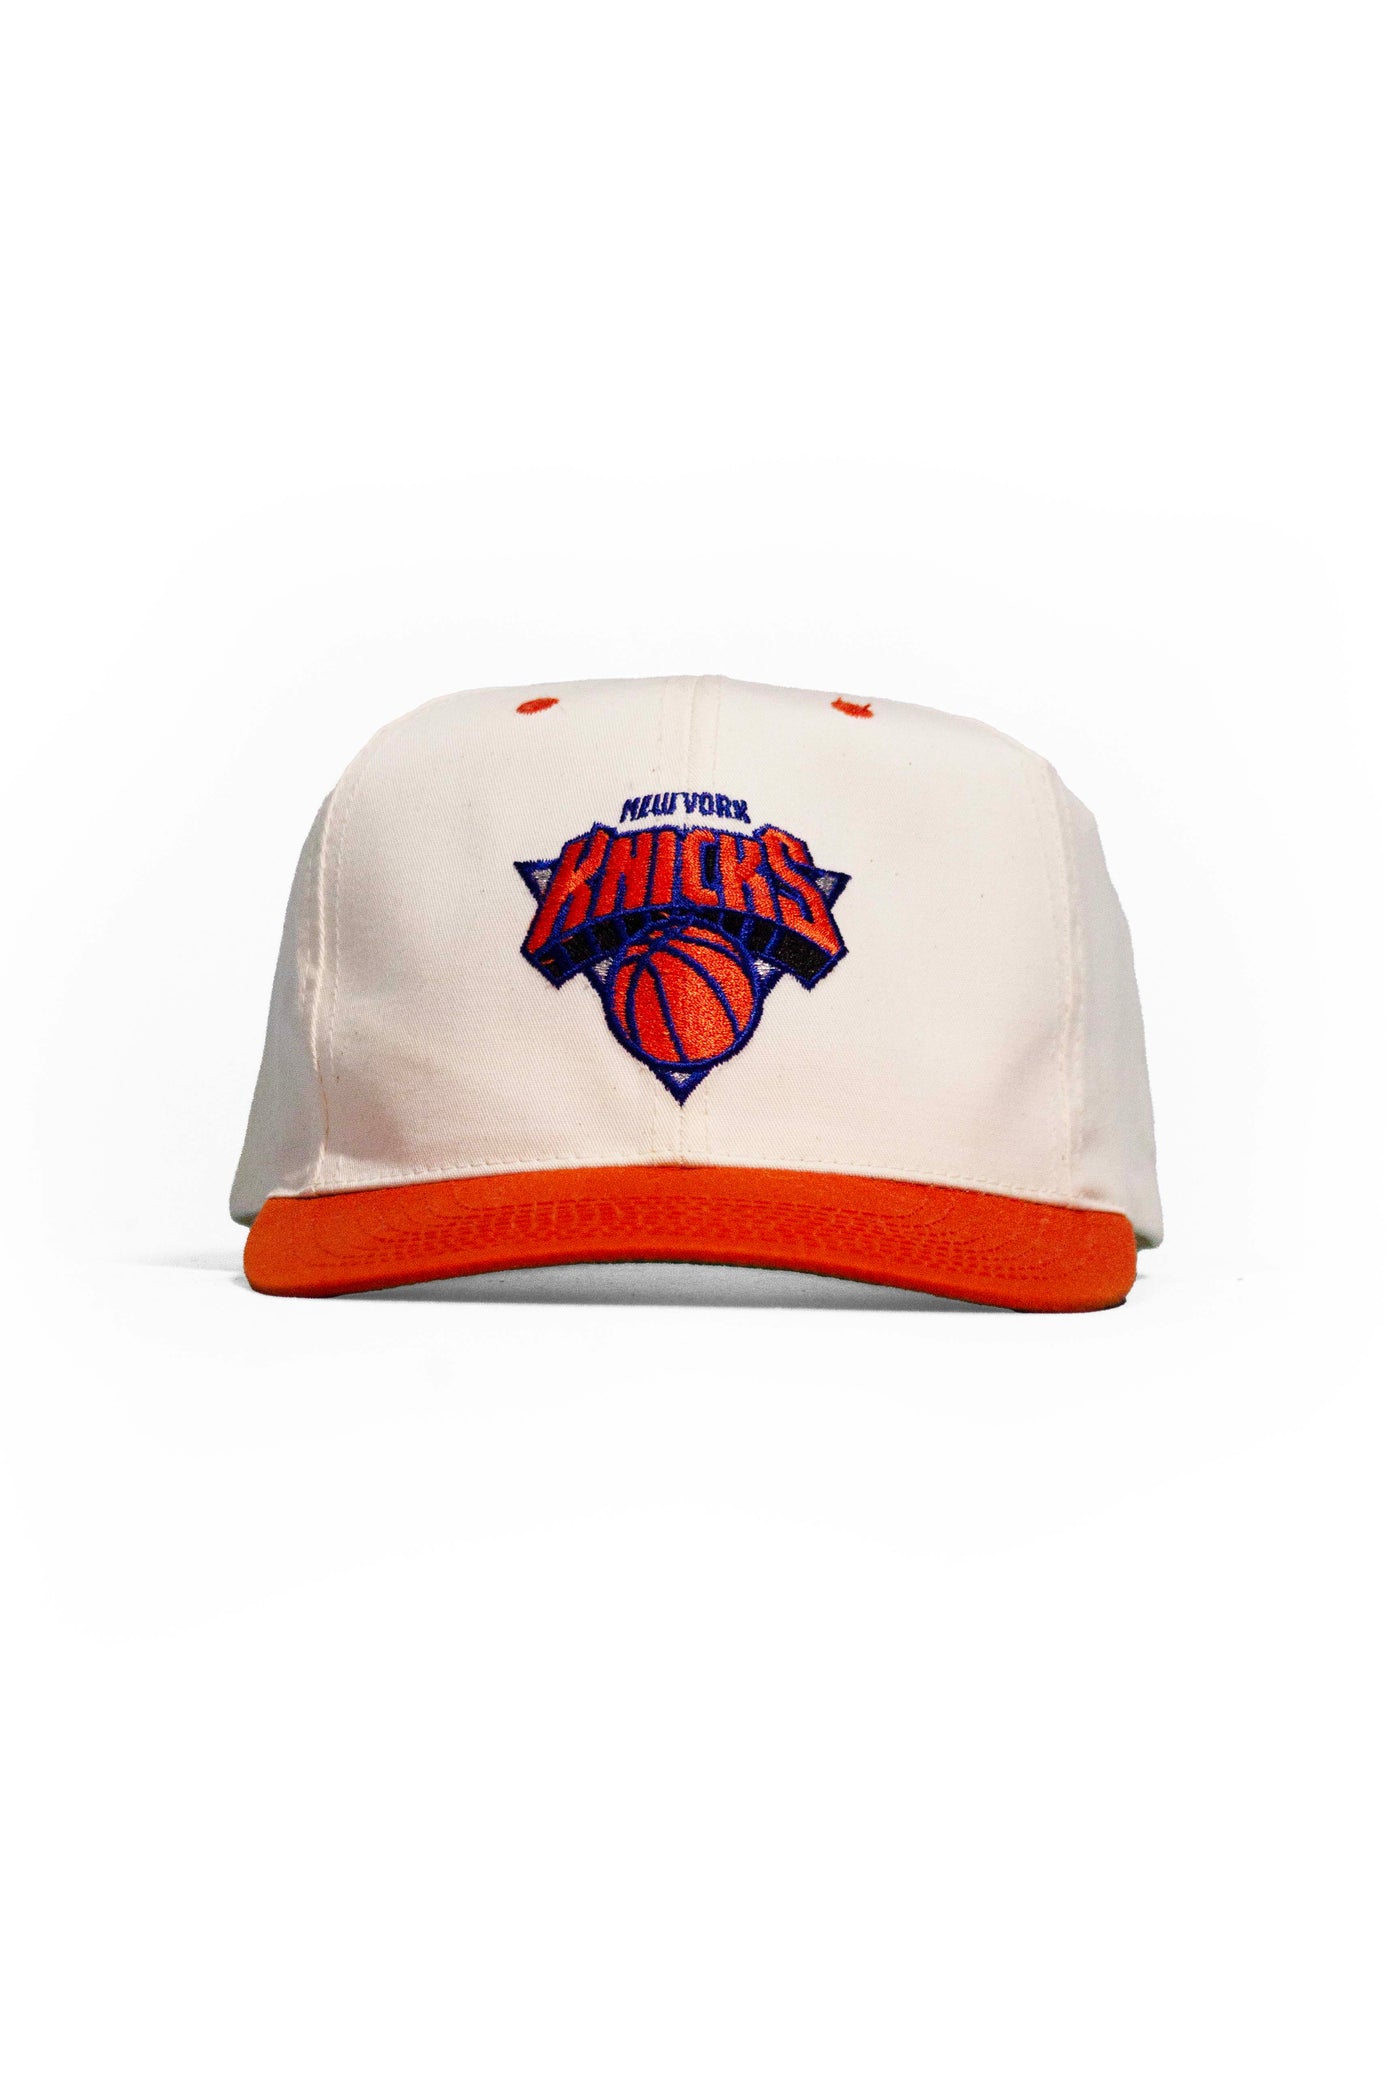 Vintage 90s NY Knicks Snapback